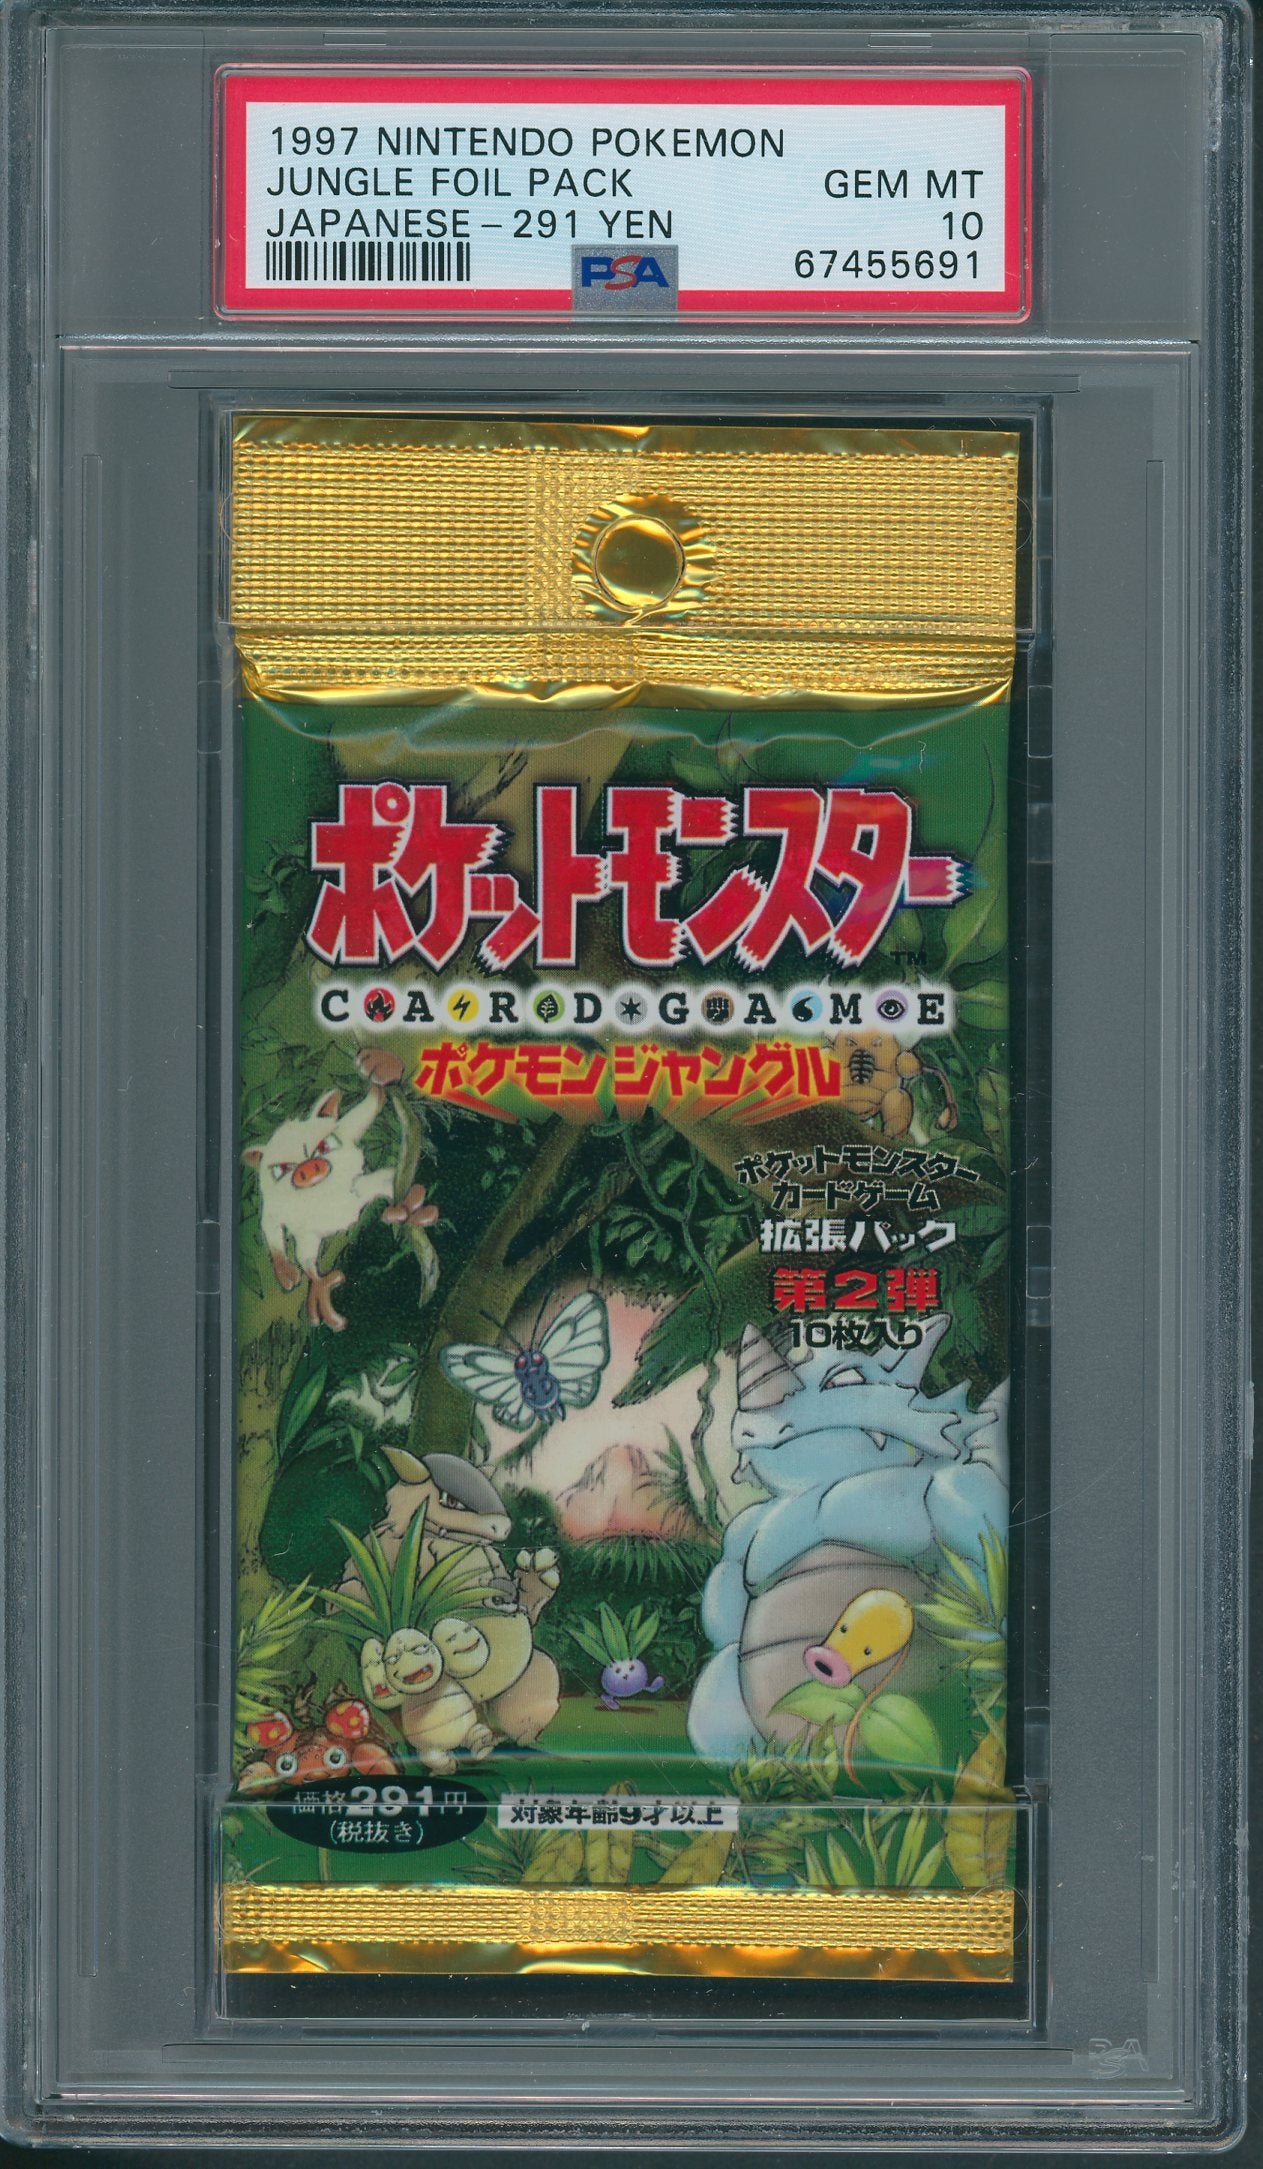 1997 Nintendo Pokemon Jungle Unopened Pack Japanese 291 Yen PSA 10 *5691